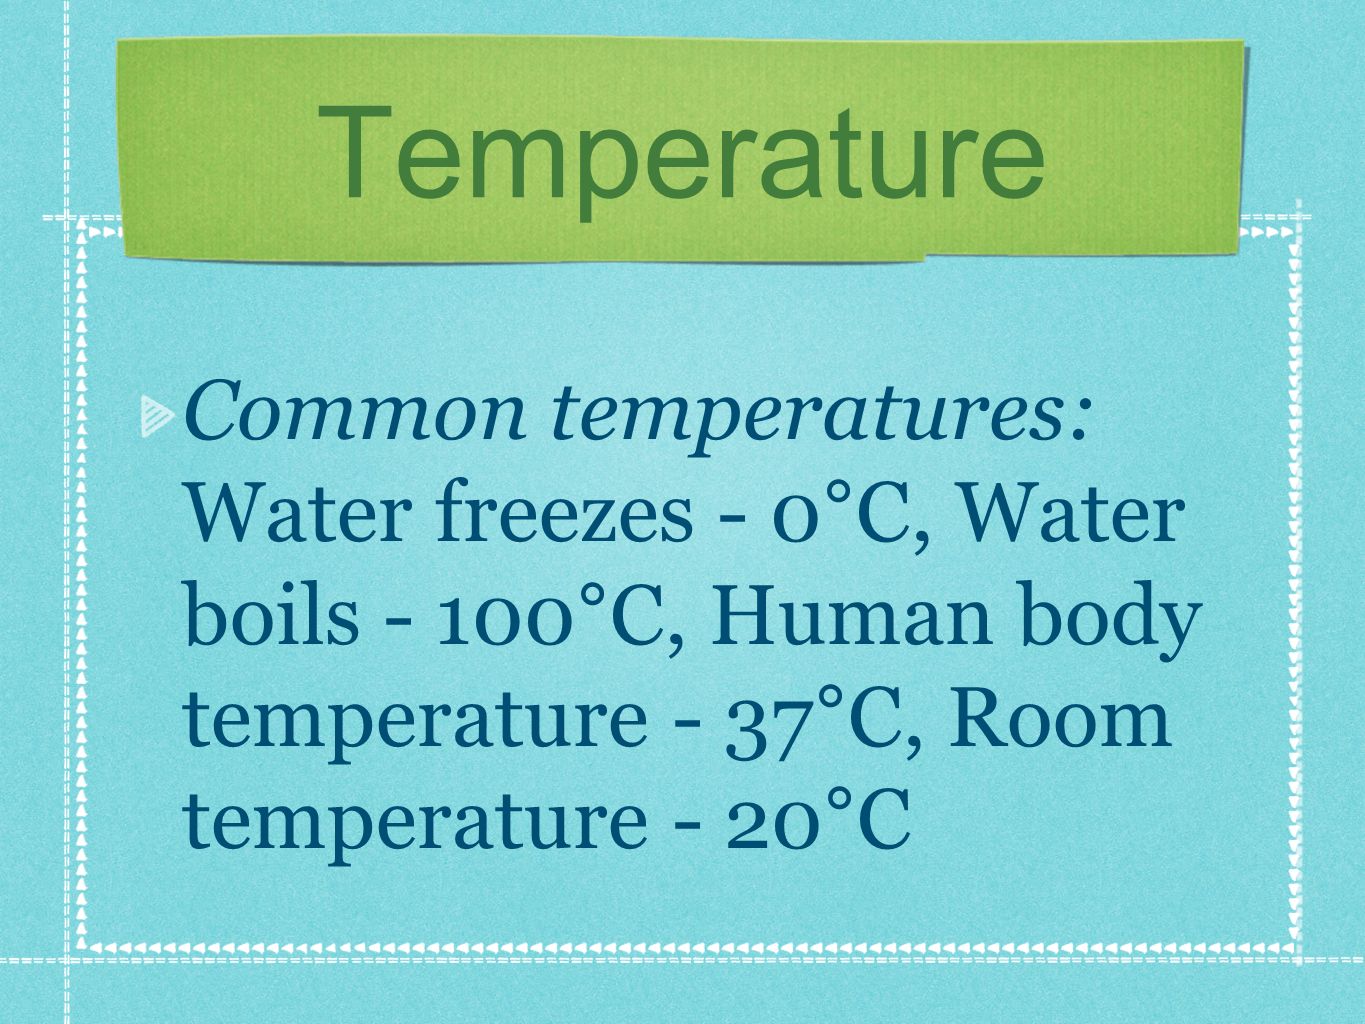 Common temperatures: Water freezes - 0°C, Water boils - 100°C, Human body temperature - 37°C, Room temperature - 20°C